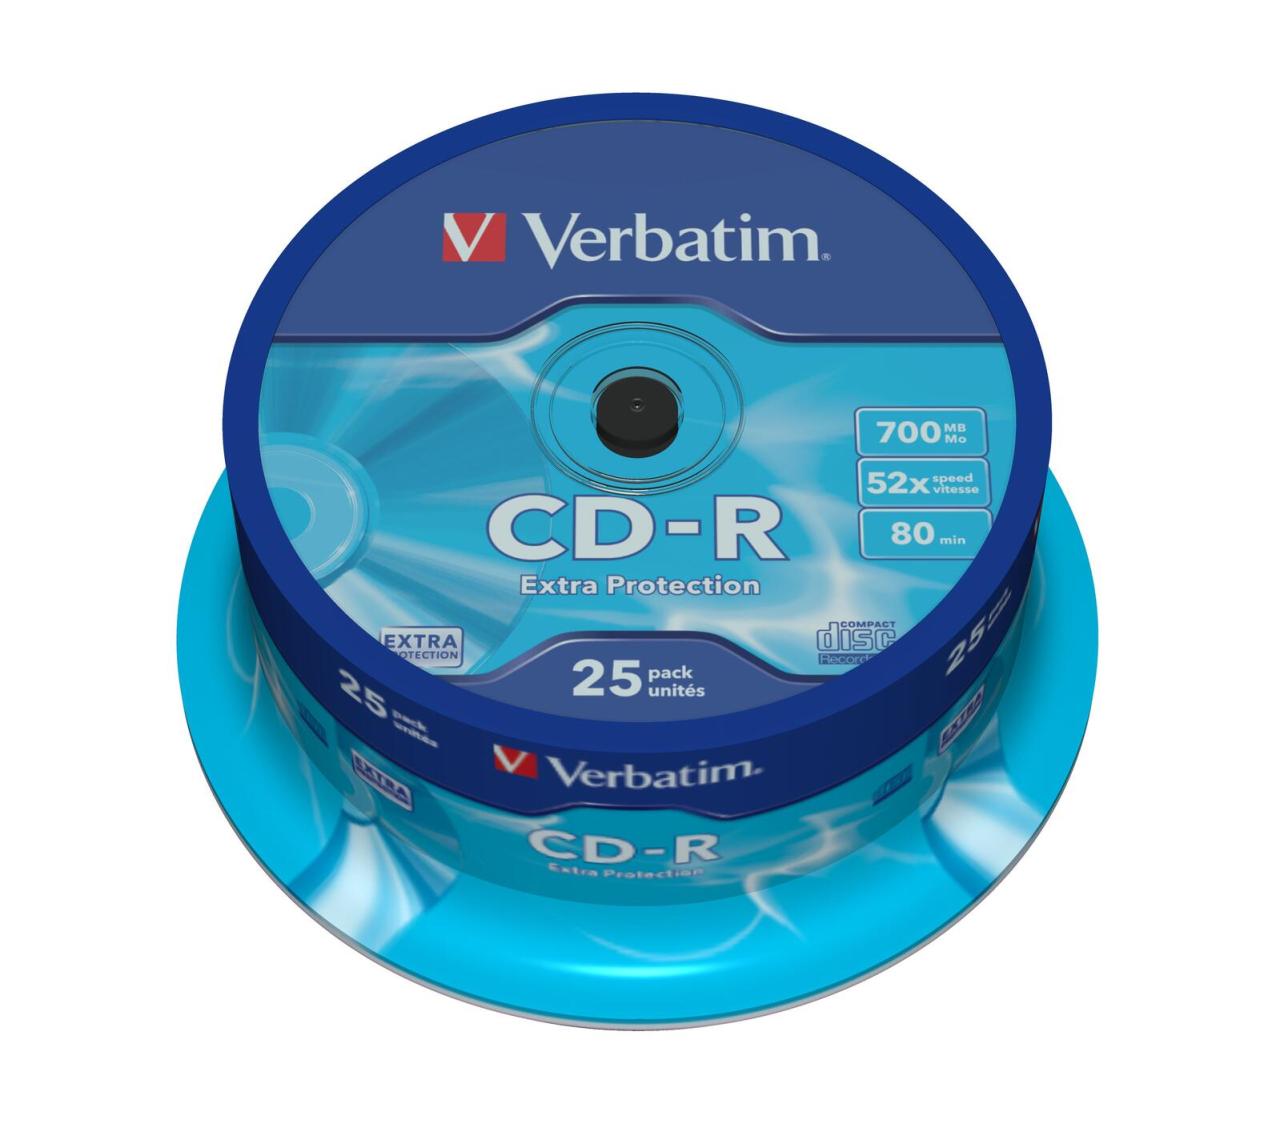 Verbatim CD-R 700MB 52x 25er Spindel von Verbatim